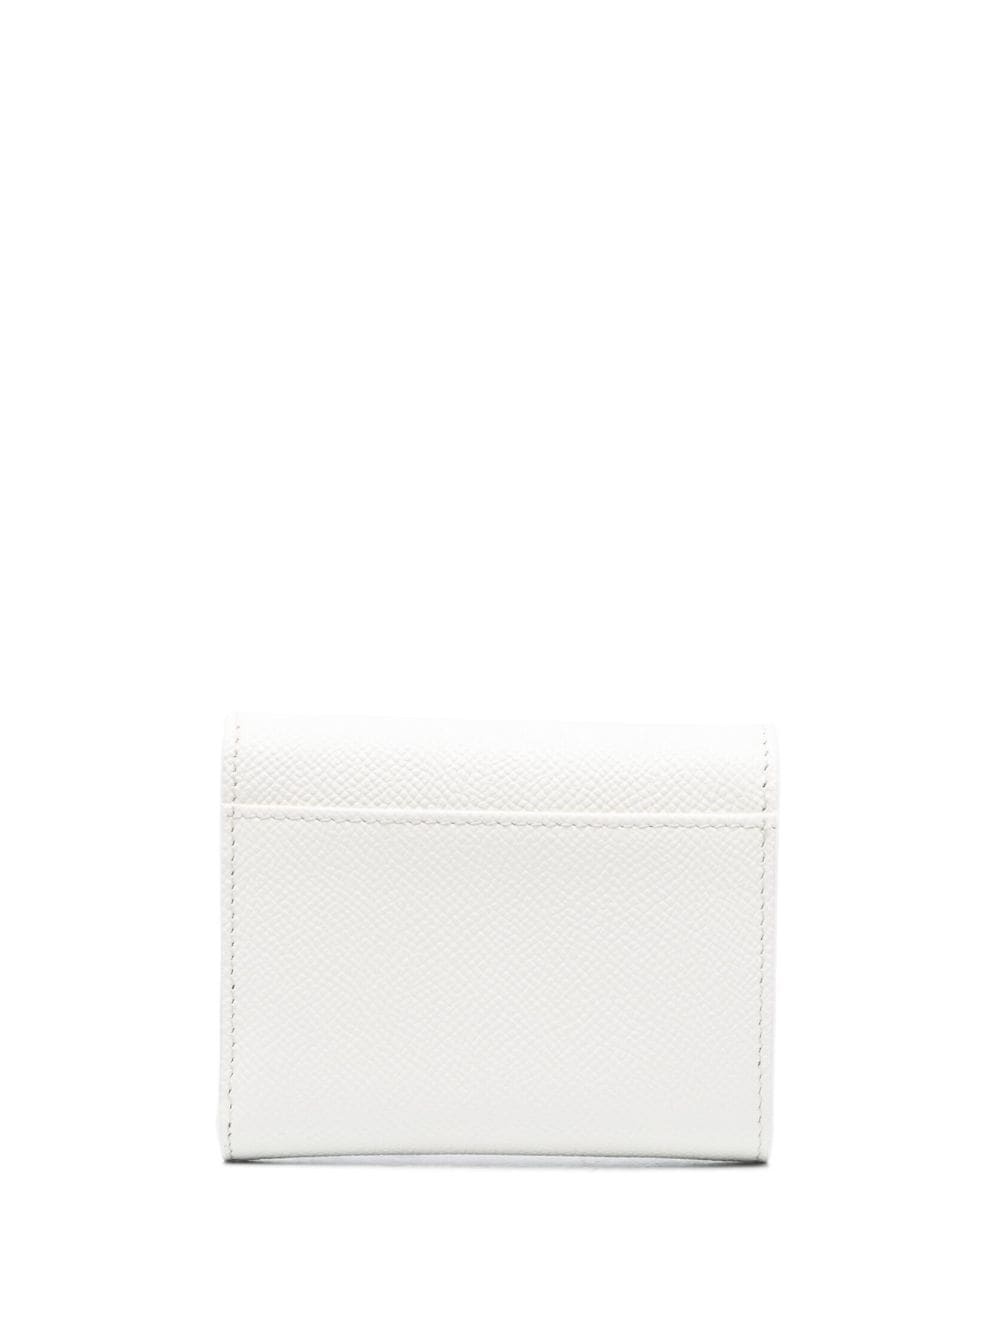 tri-fold leather wallet - 2